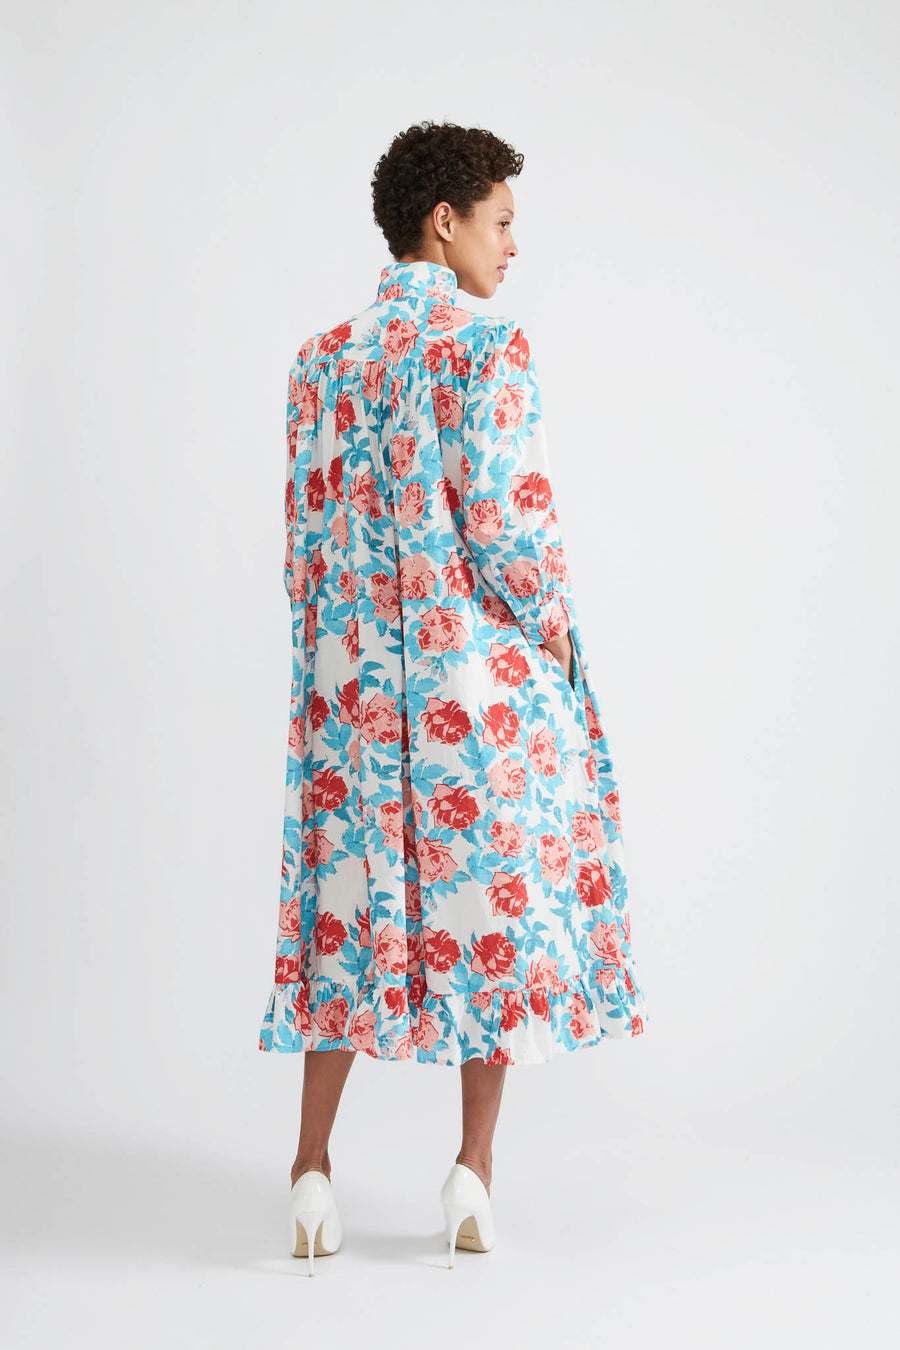 BATSHEVA - Iva Dress in Painted Rose Cotton